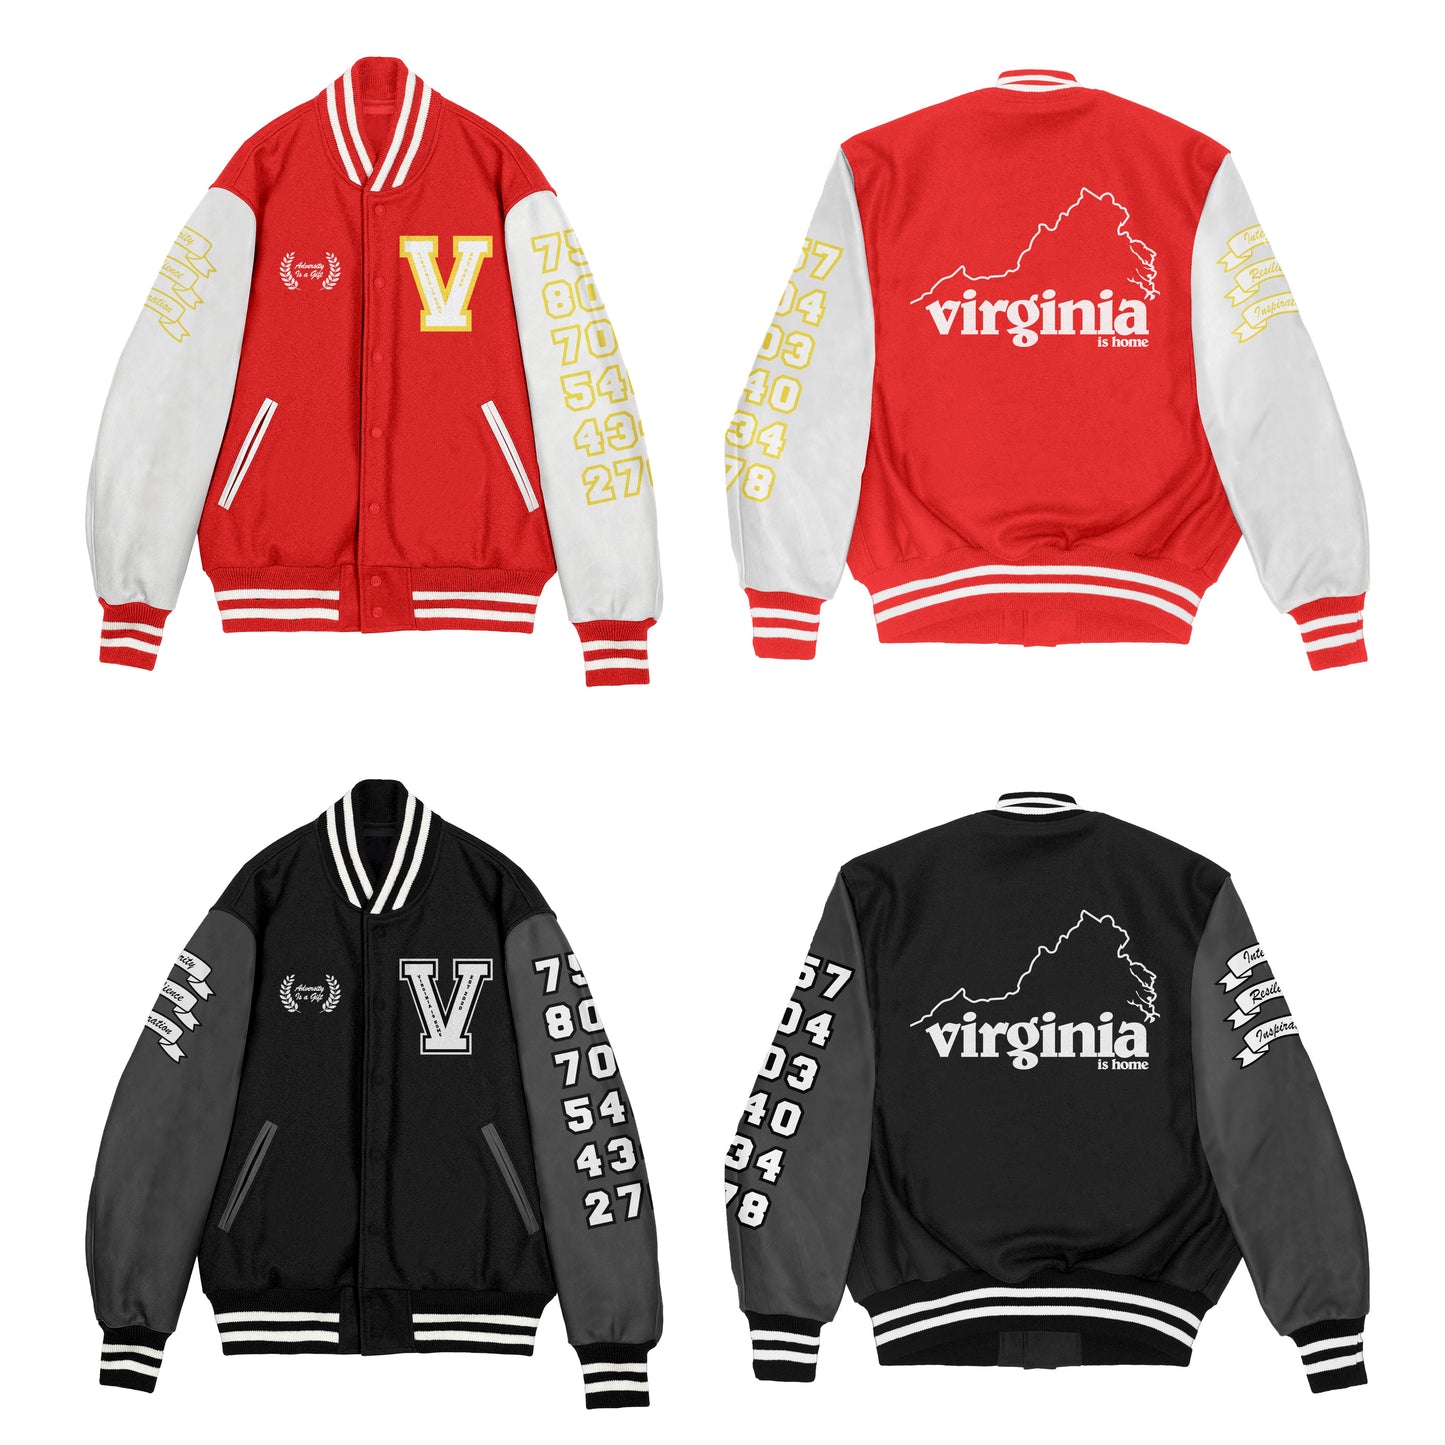 Virginia is Home Varsity Letterman Jacket 2nd Edition